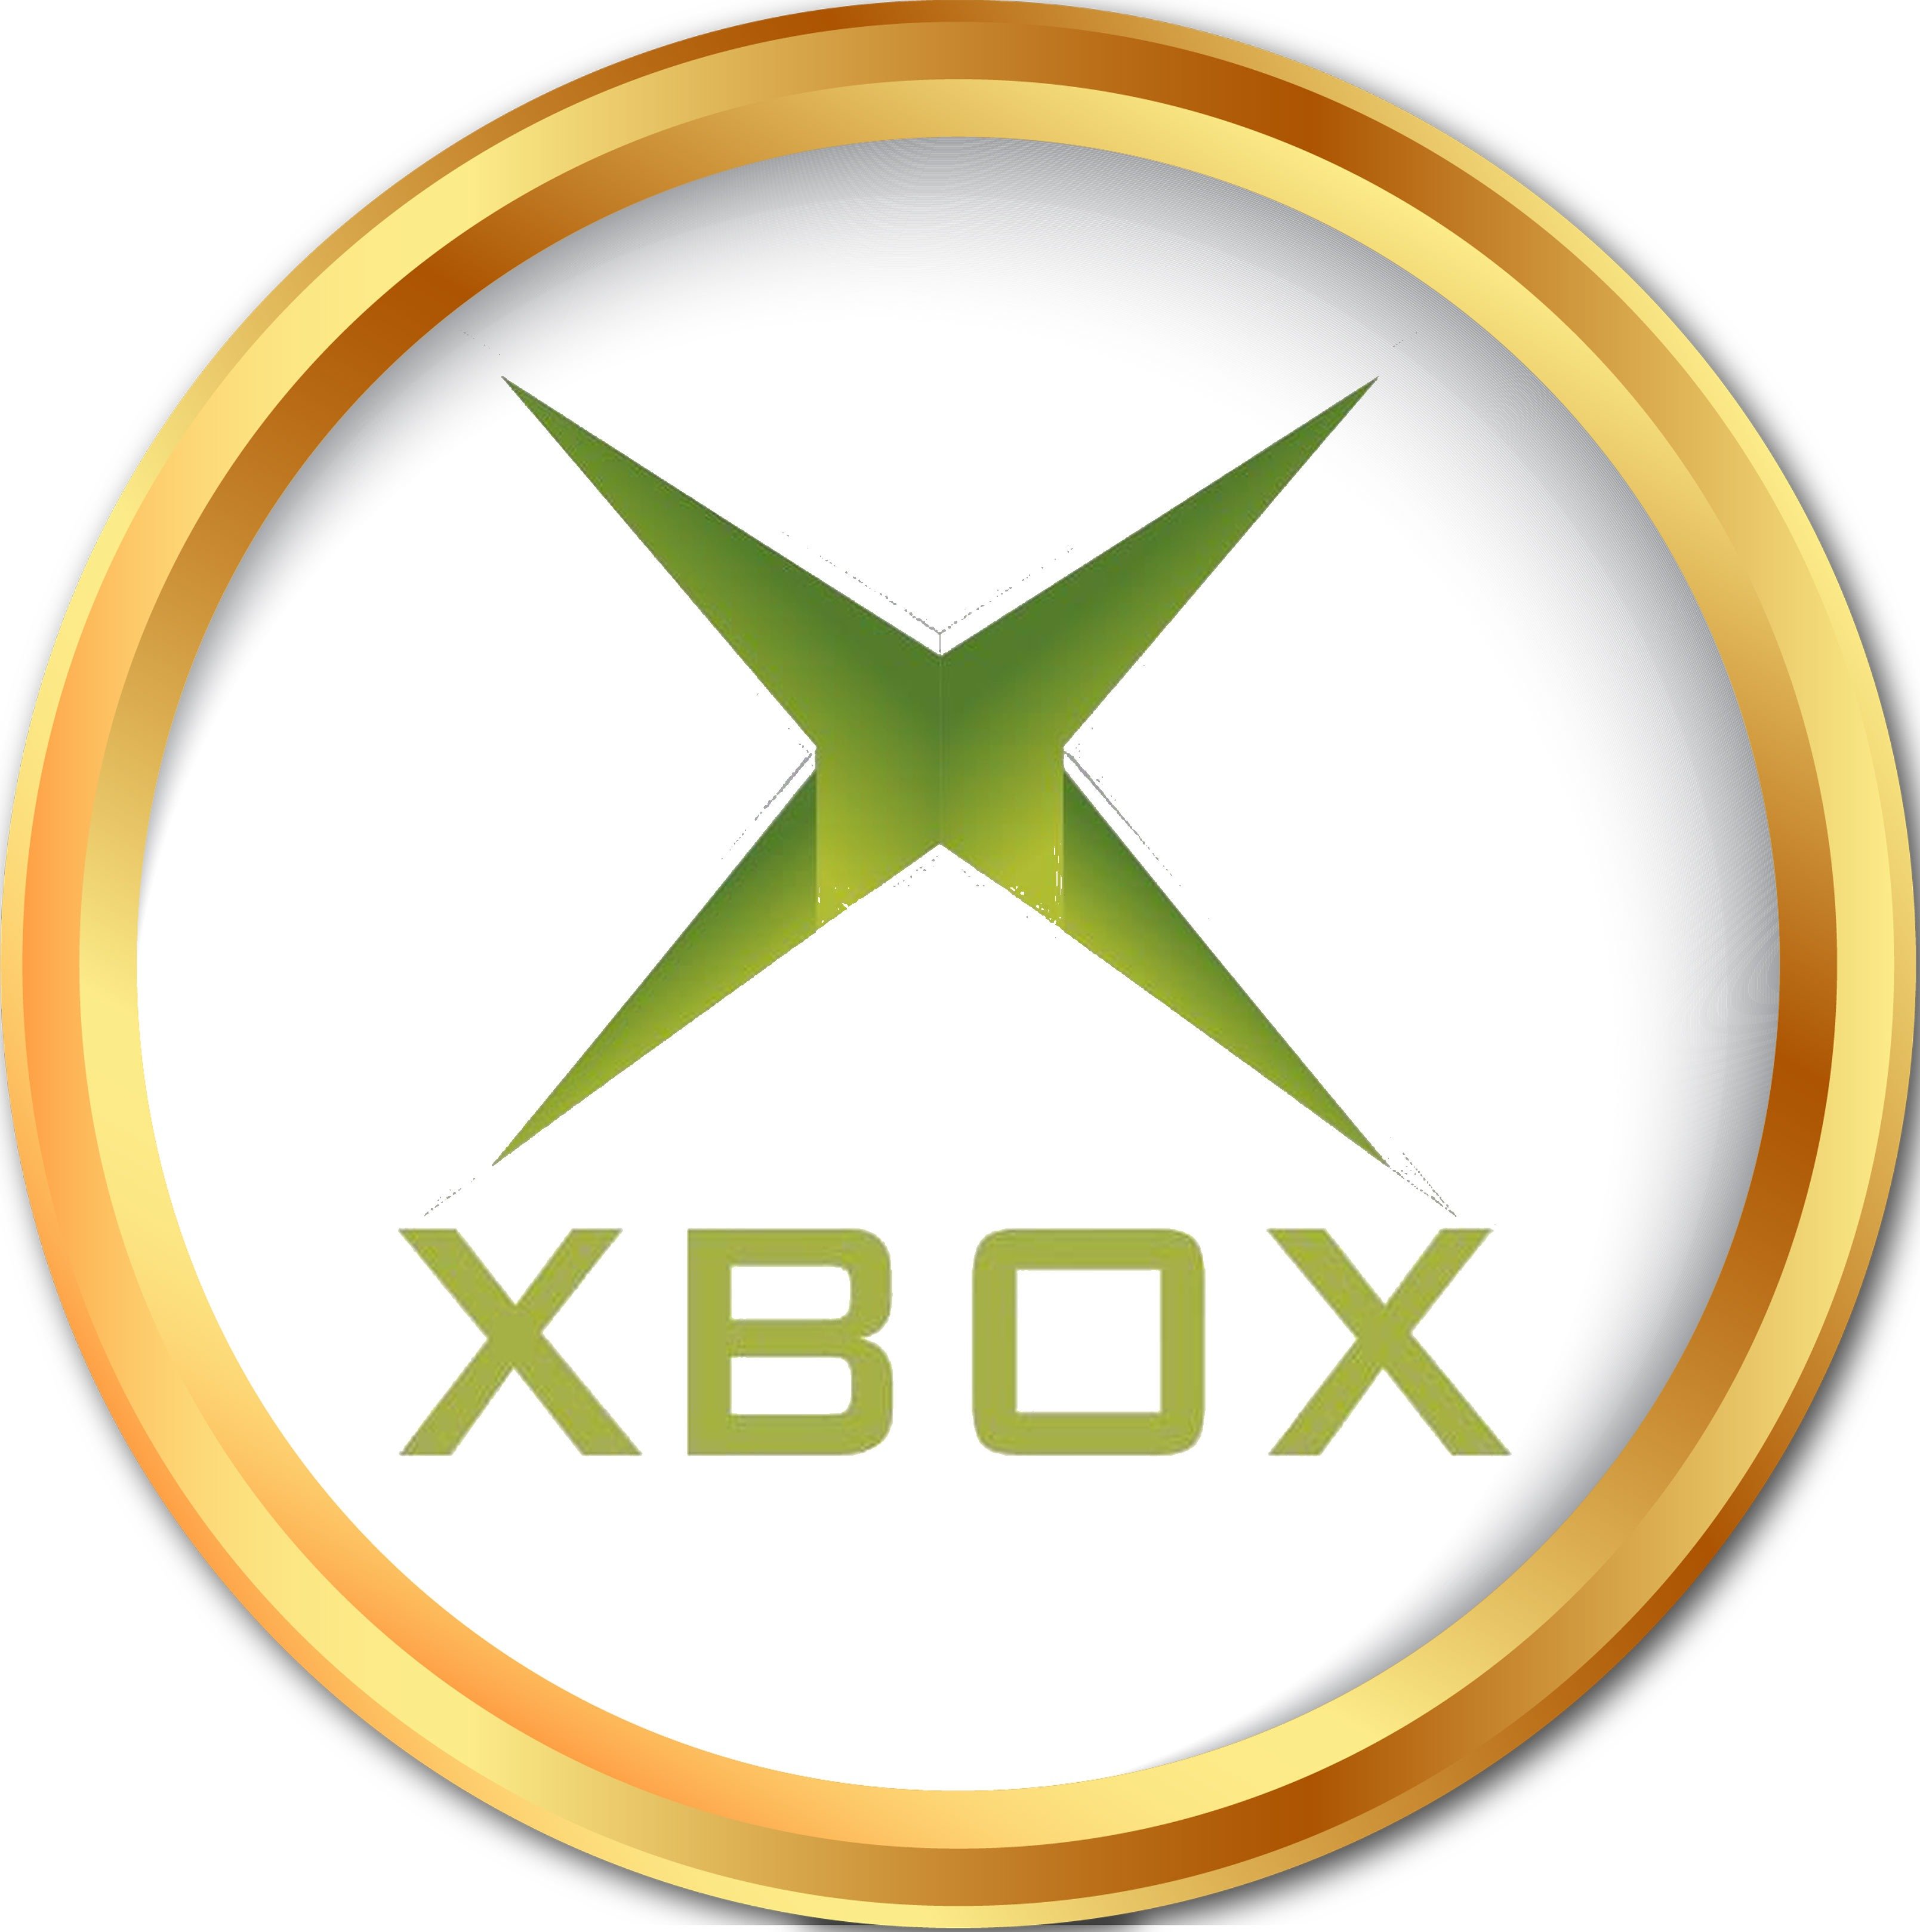 Xbox 360. - Videogames - Residencial Santo Antônio, Anápolis 1248489310